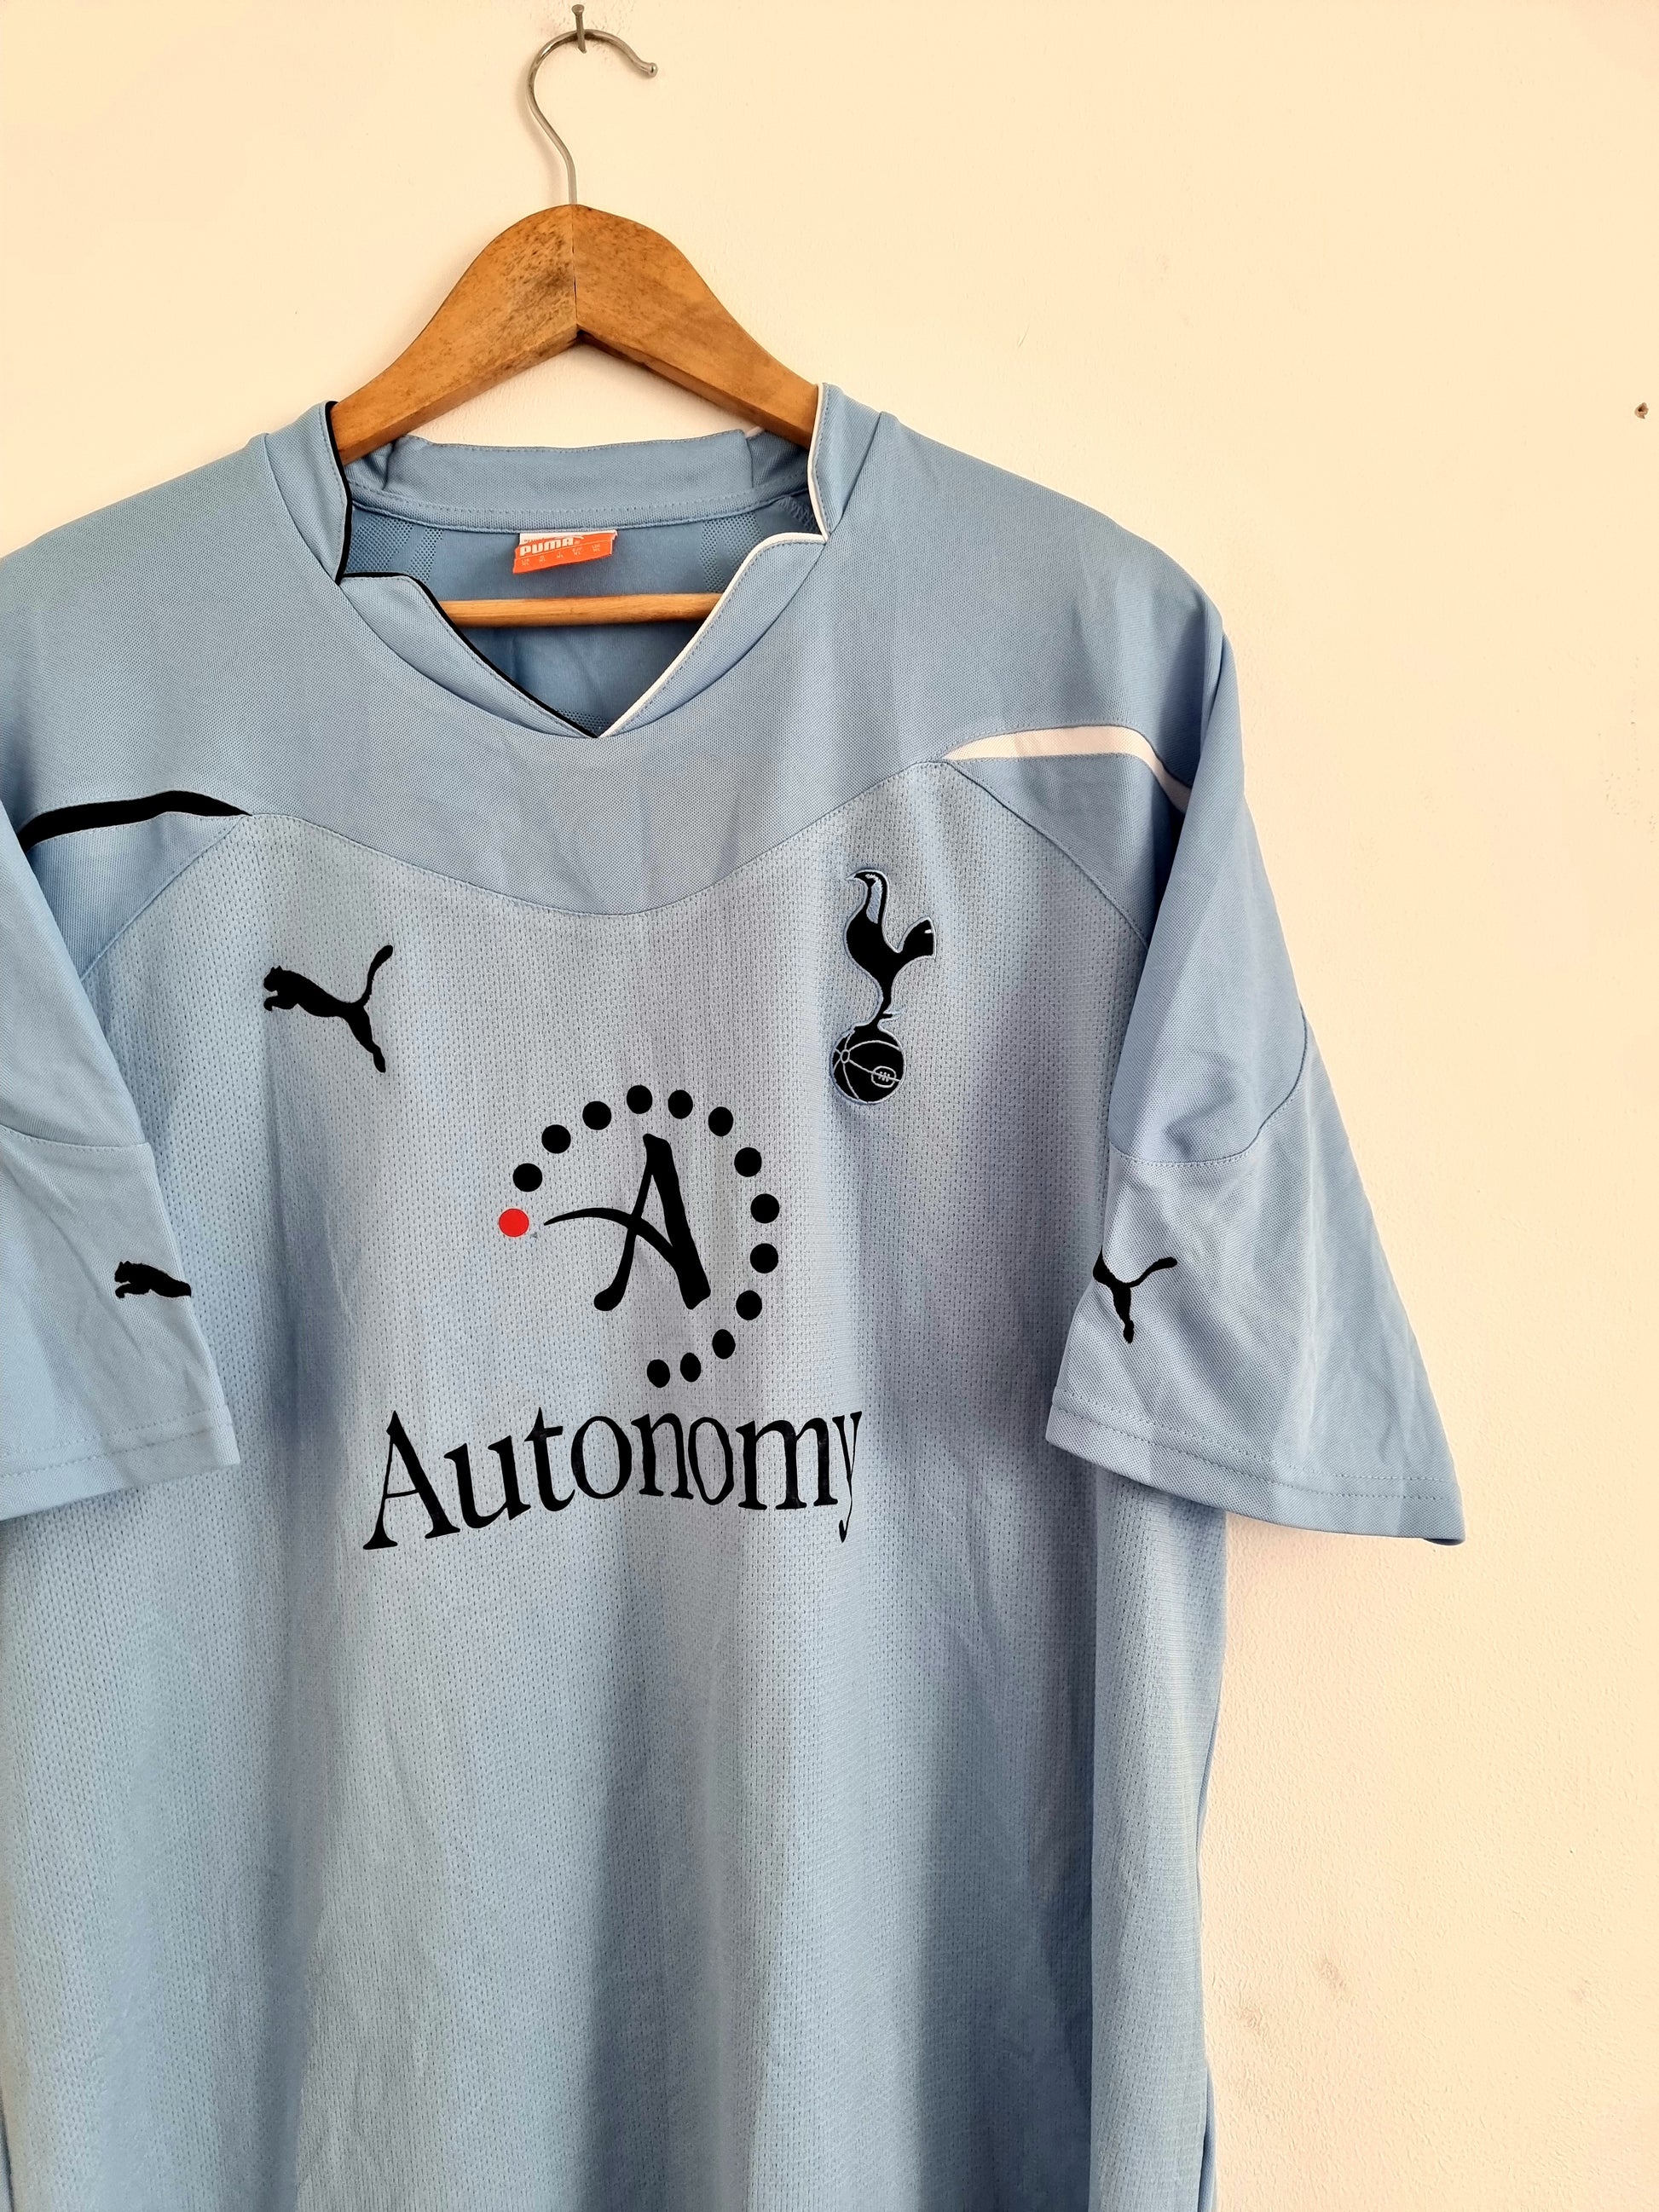 Tottenham Hotspur 2010-11 Third Kit